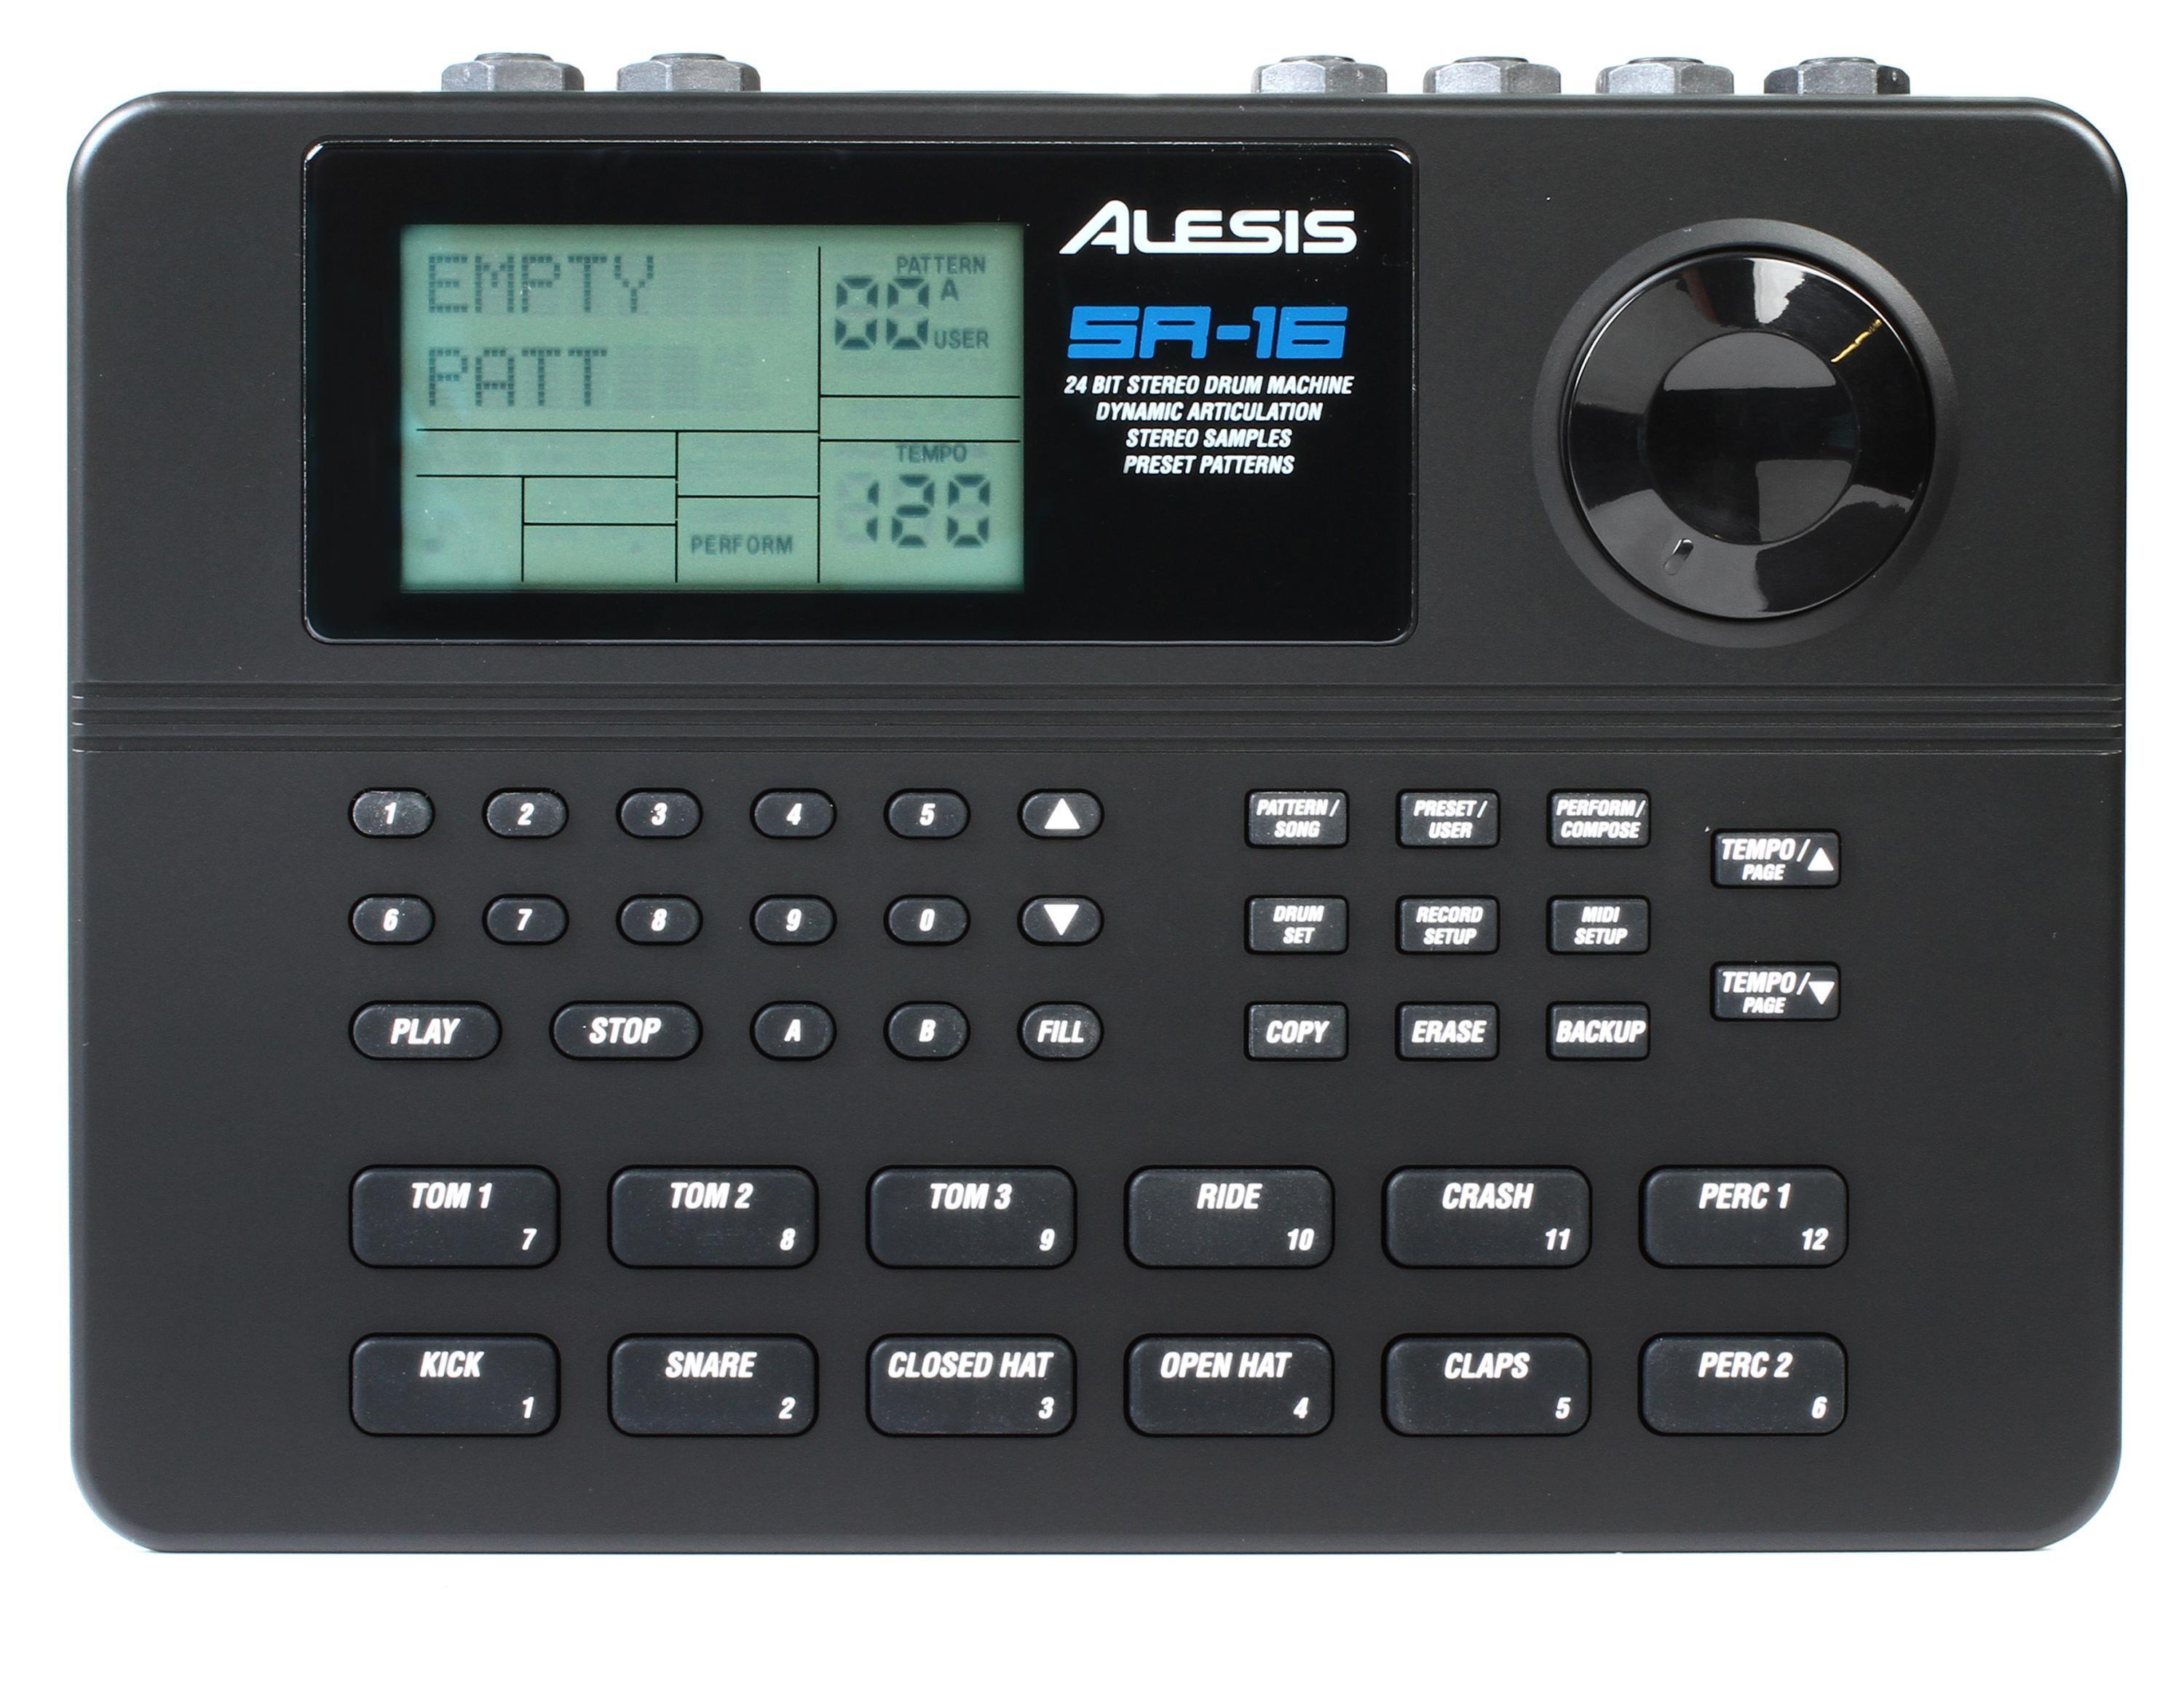 Alesis SR-16 Portable Electronic Drum Machine | Sweetwater